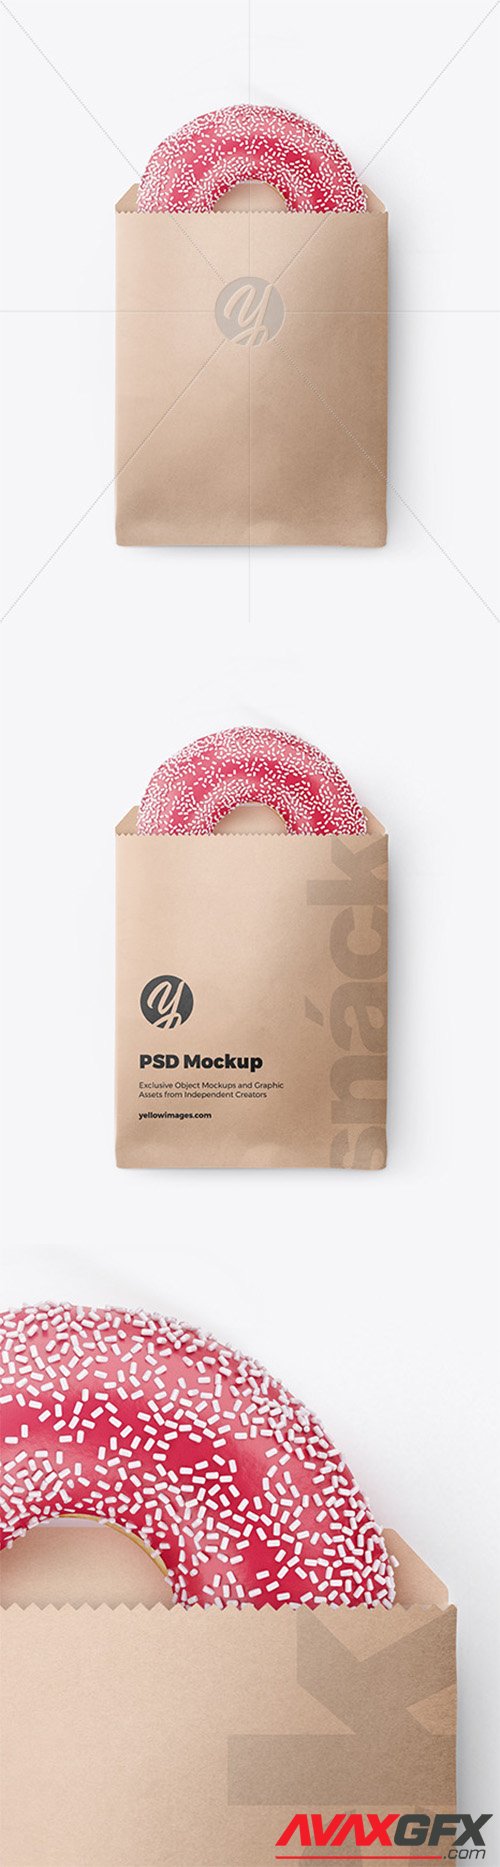 Download 10 Four Paper Boxes Psd Mockup Branding Mockups PSD Mockup Templates